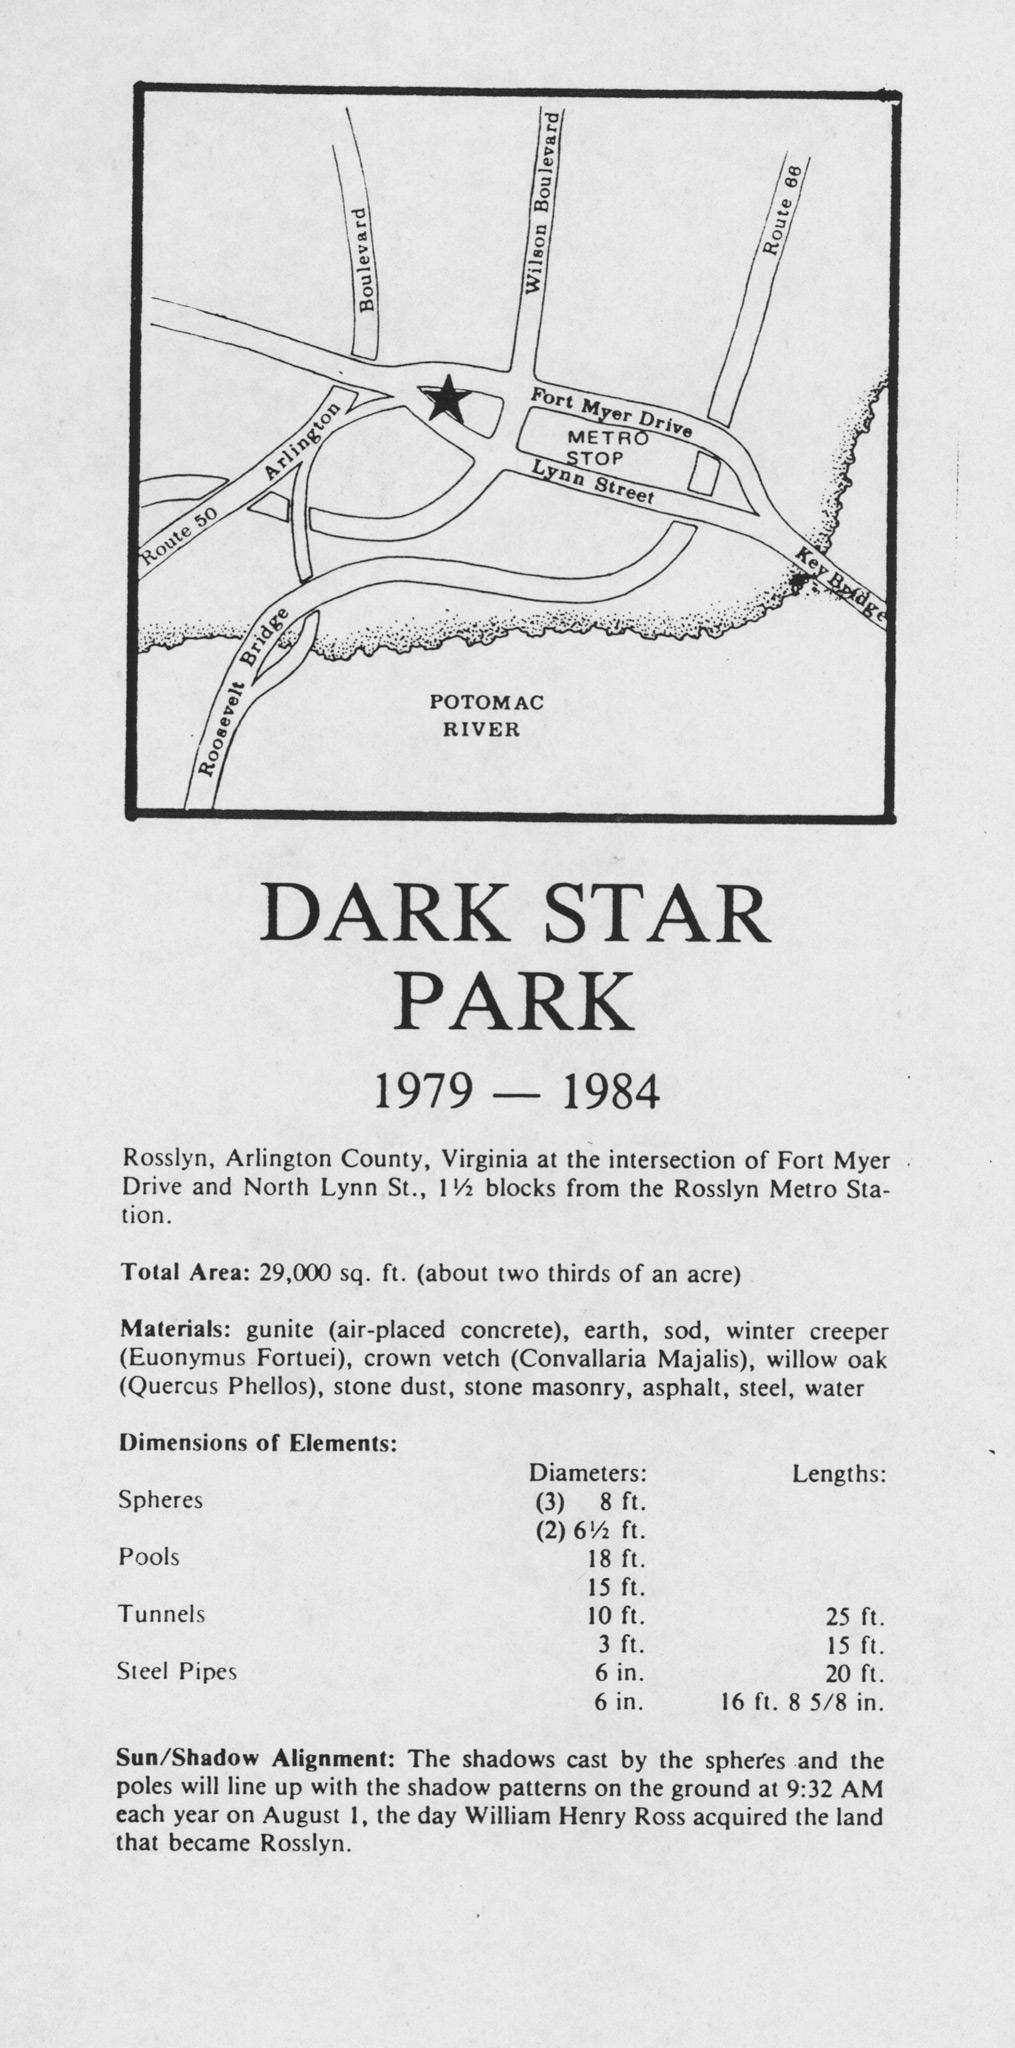 Informational brochure on Nancy Holt's Dark Star Park (1979-84)